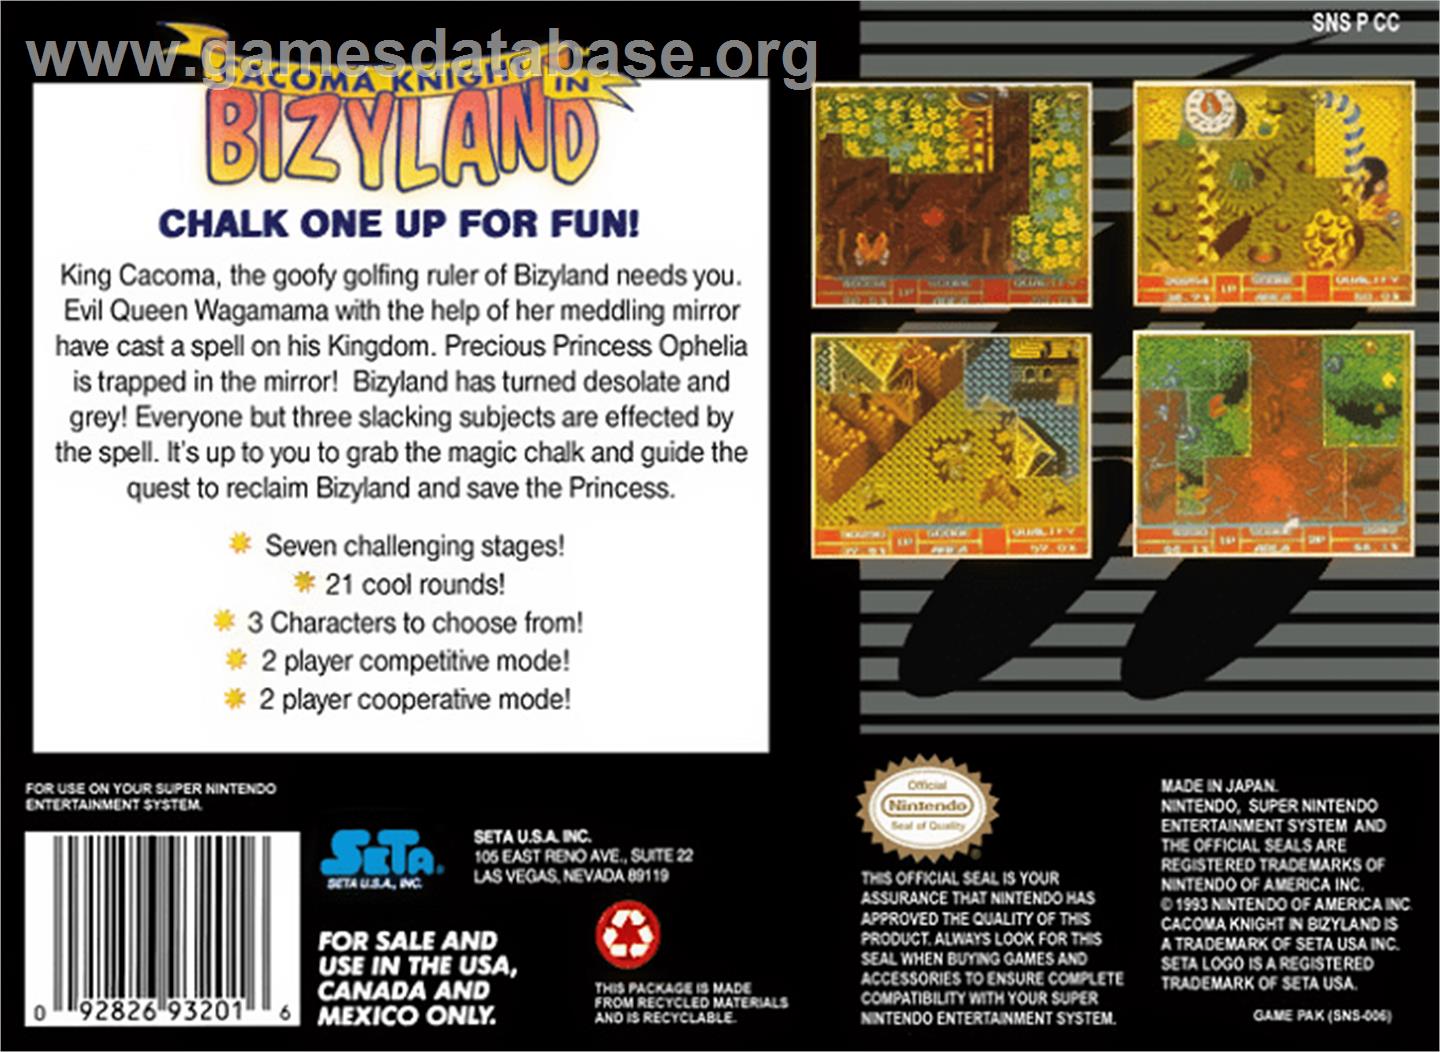 Cacoma Knight in Bizyland - Nintendo SNES - Artwork - Box Back